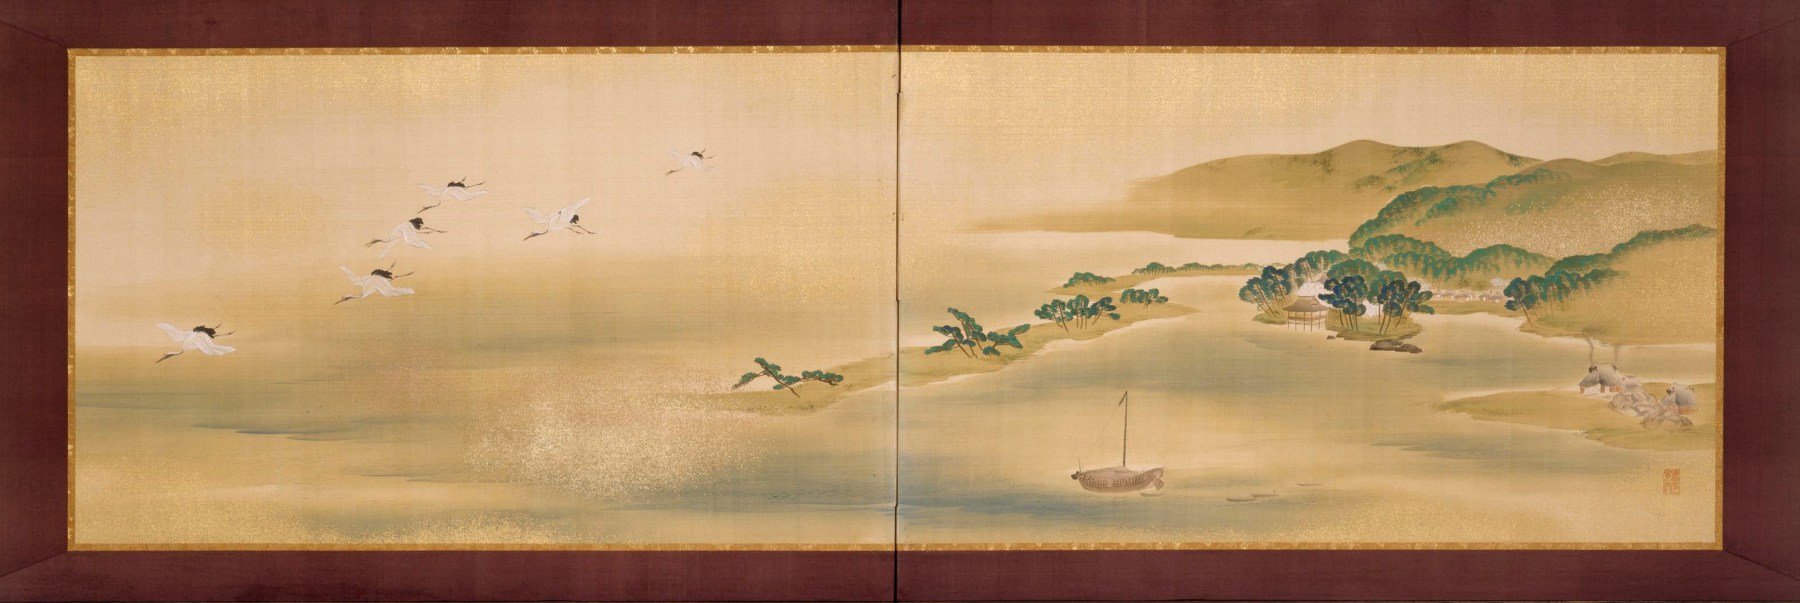 Transcendent Kyoto -  - Viewing Room - Joan B Mirviss LTD Viewing Room